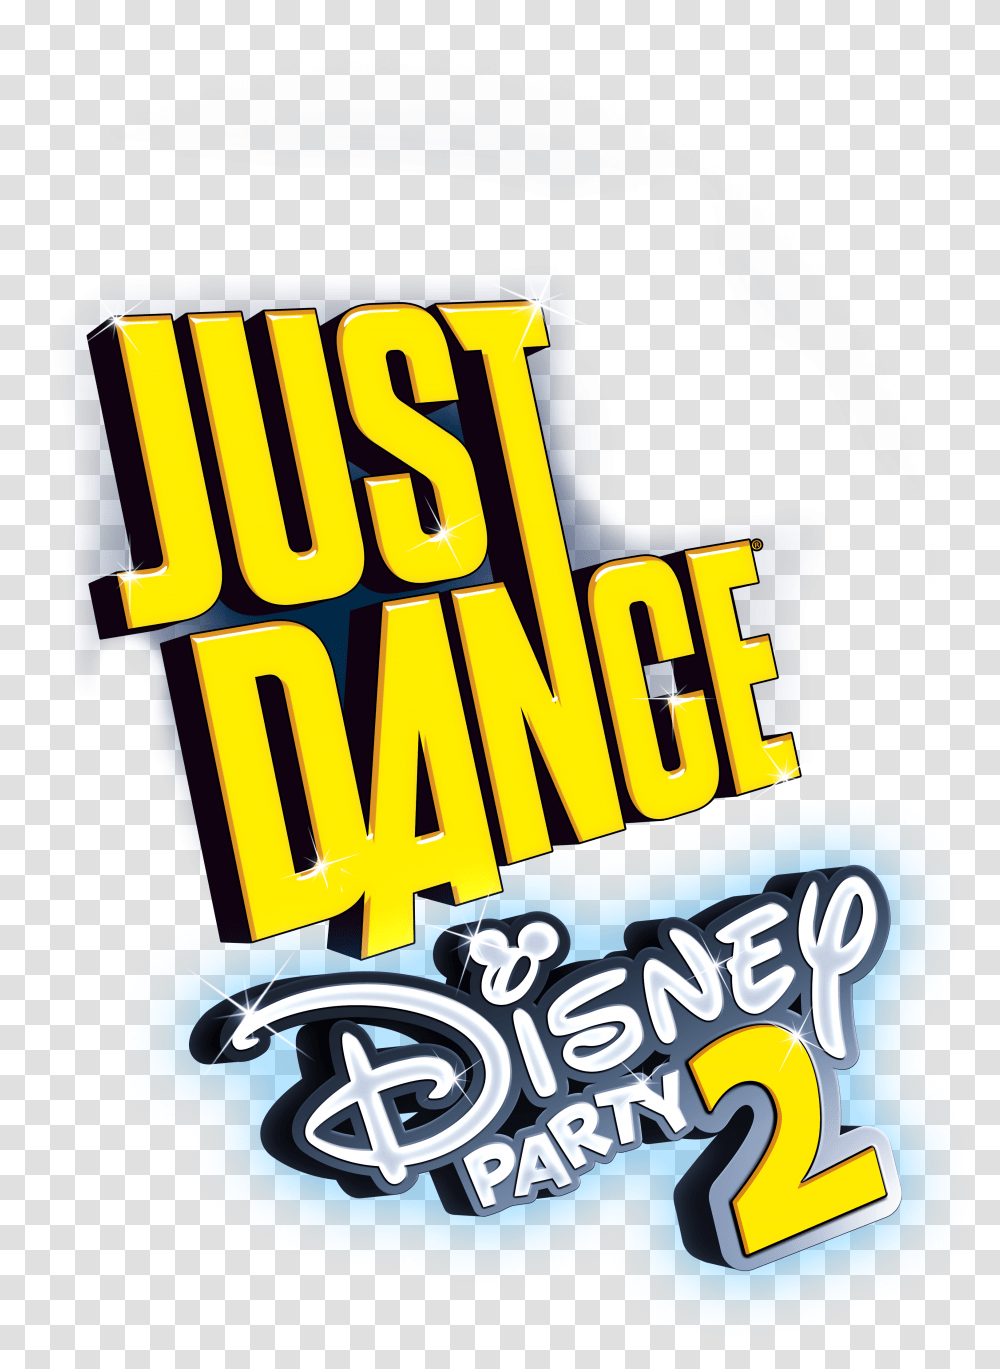 Just Dance Disney Party Details, Advertisement, Poster, Flyer, Paper Transparent Png